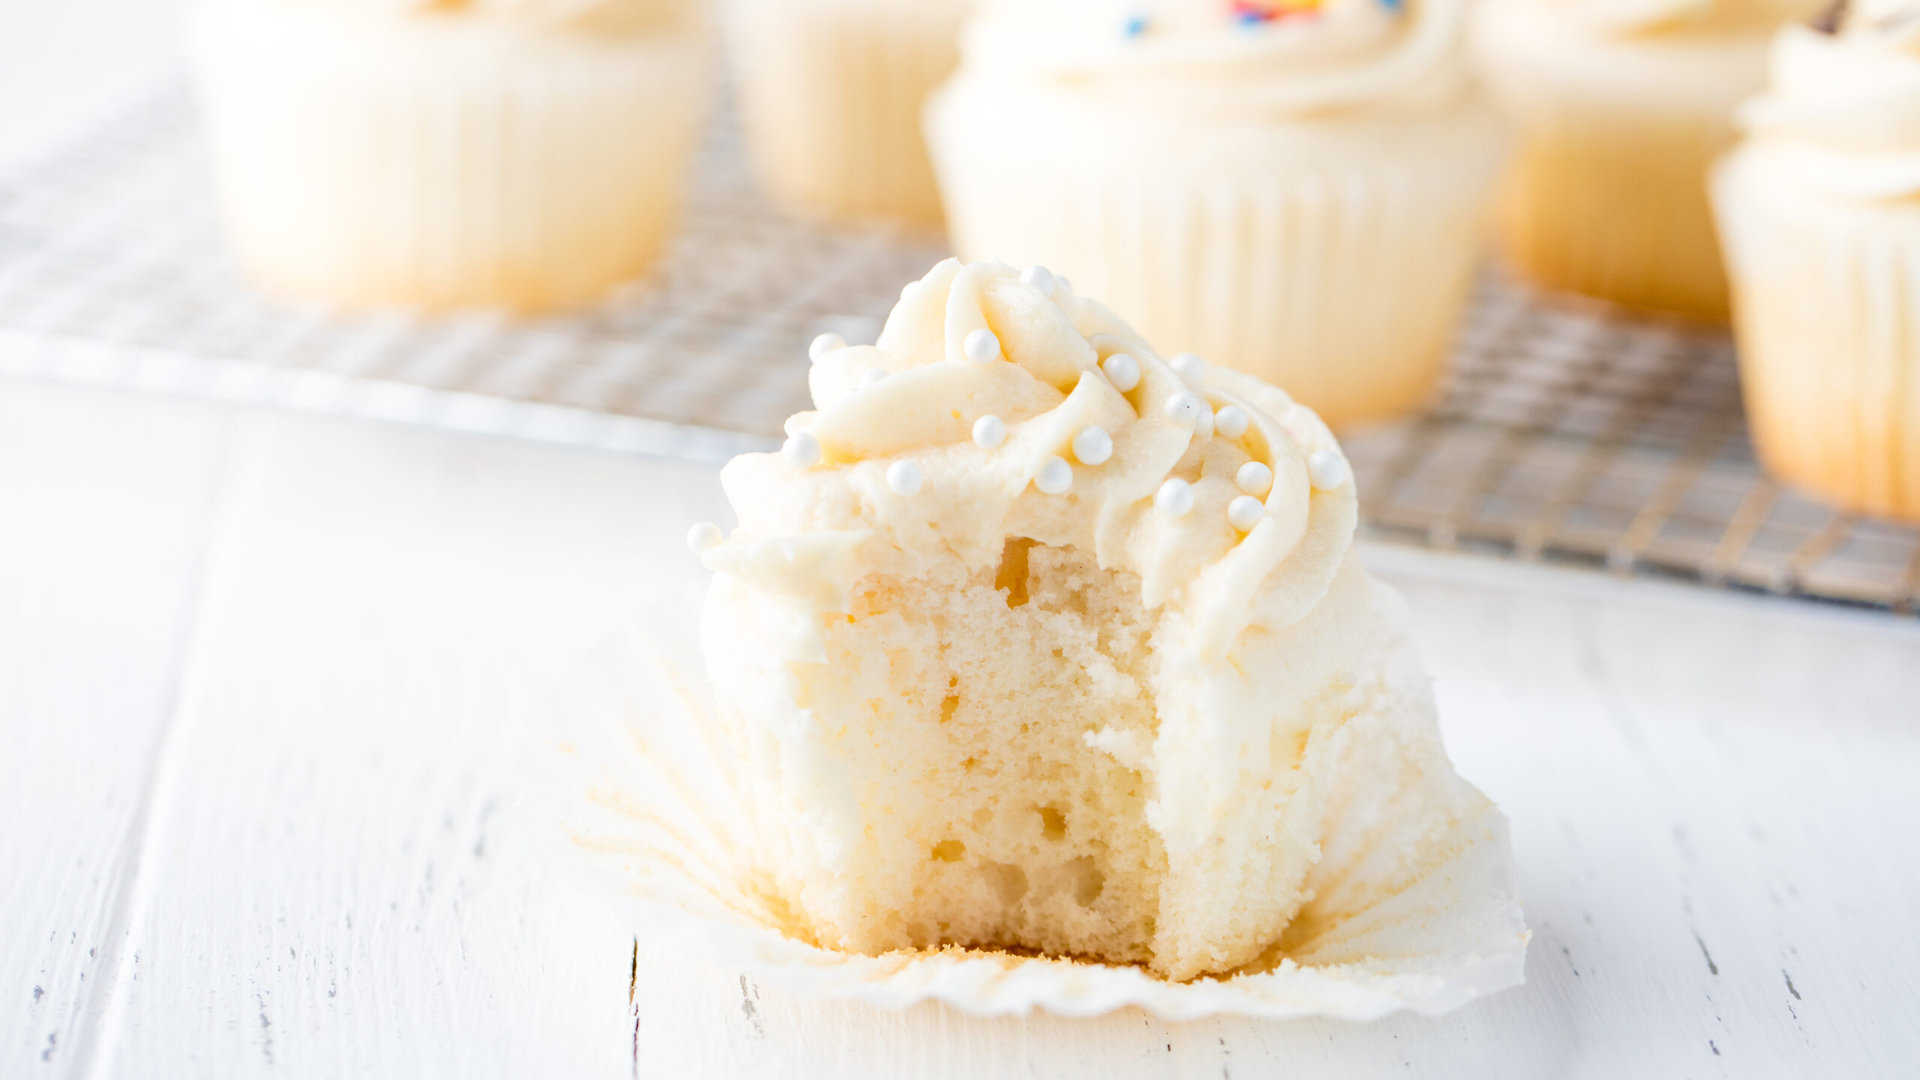 https://thestayathomechef.com/wp-content/uploads/2020/04/The-Most-Amazing-White-Cupcakes-2-scaled.jpg